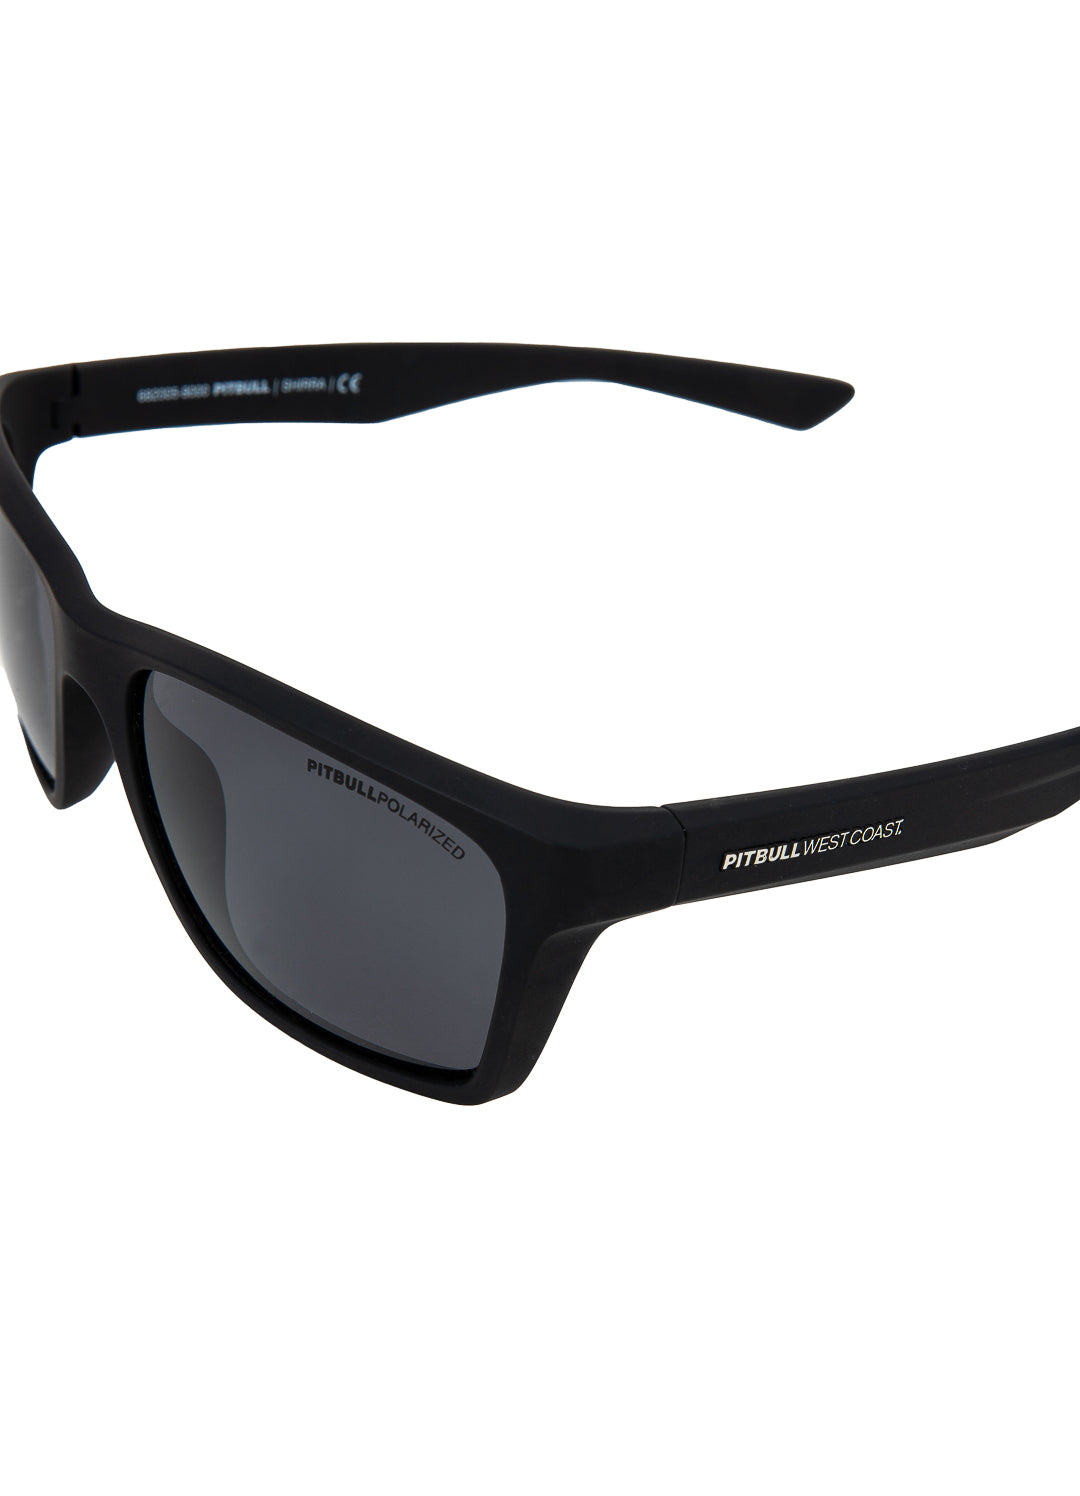 Sunglasses SHIRRA Black - Pitbull West Coast International Store 